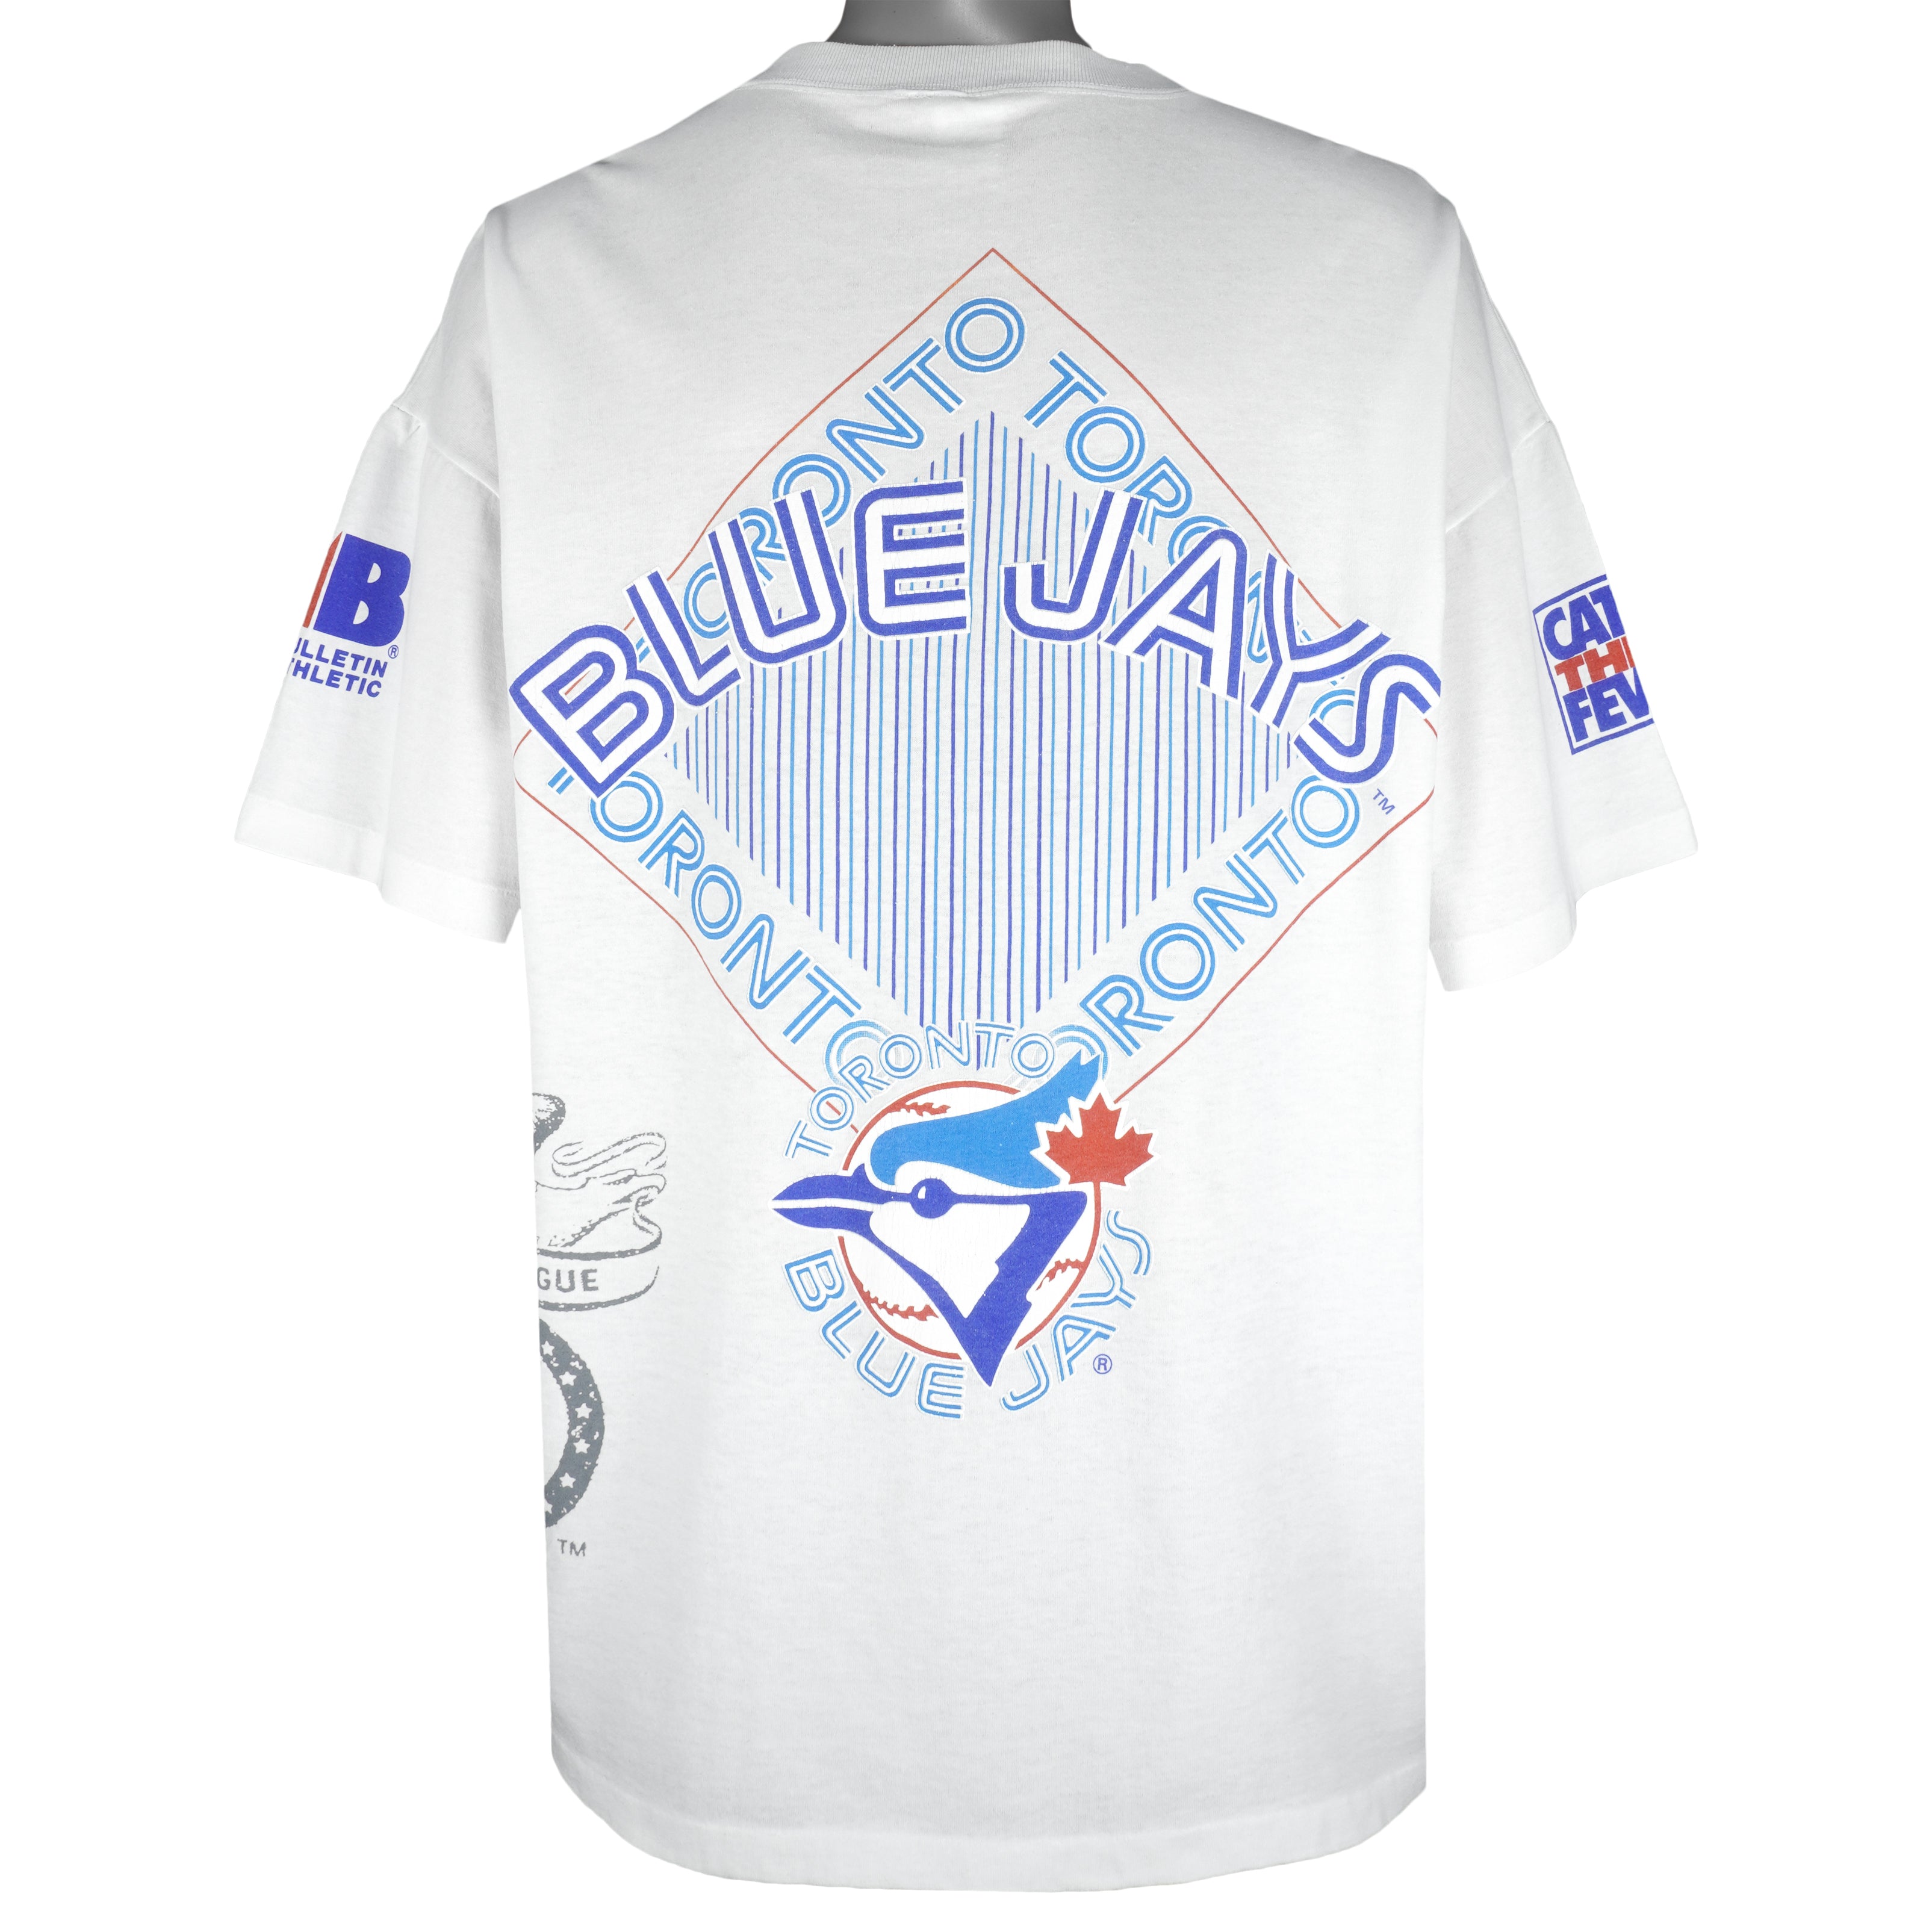 Vintage MLB (Bulletin Athletic) - Toronto Blue Jays Catch The Fever Single Stitch T-Shirt 1993 X-Large